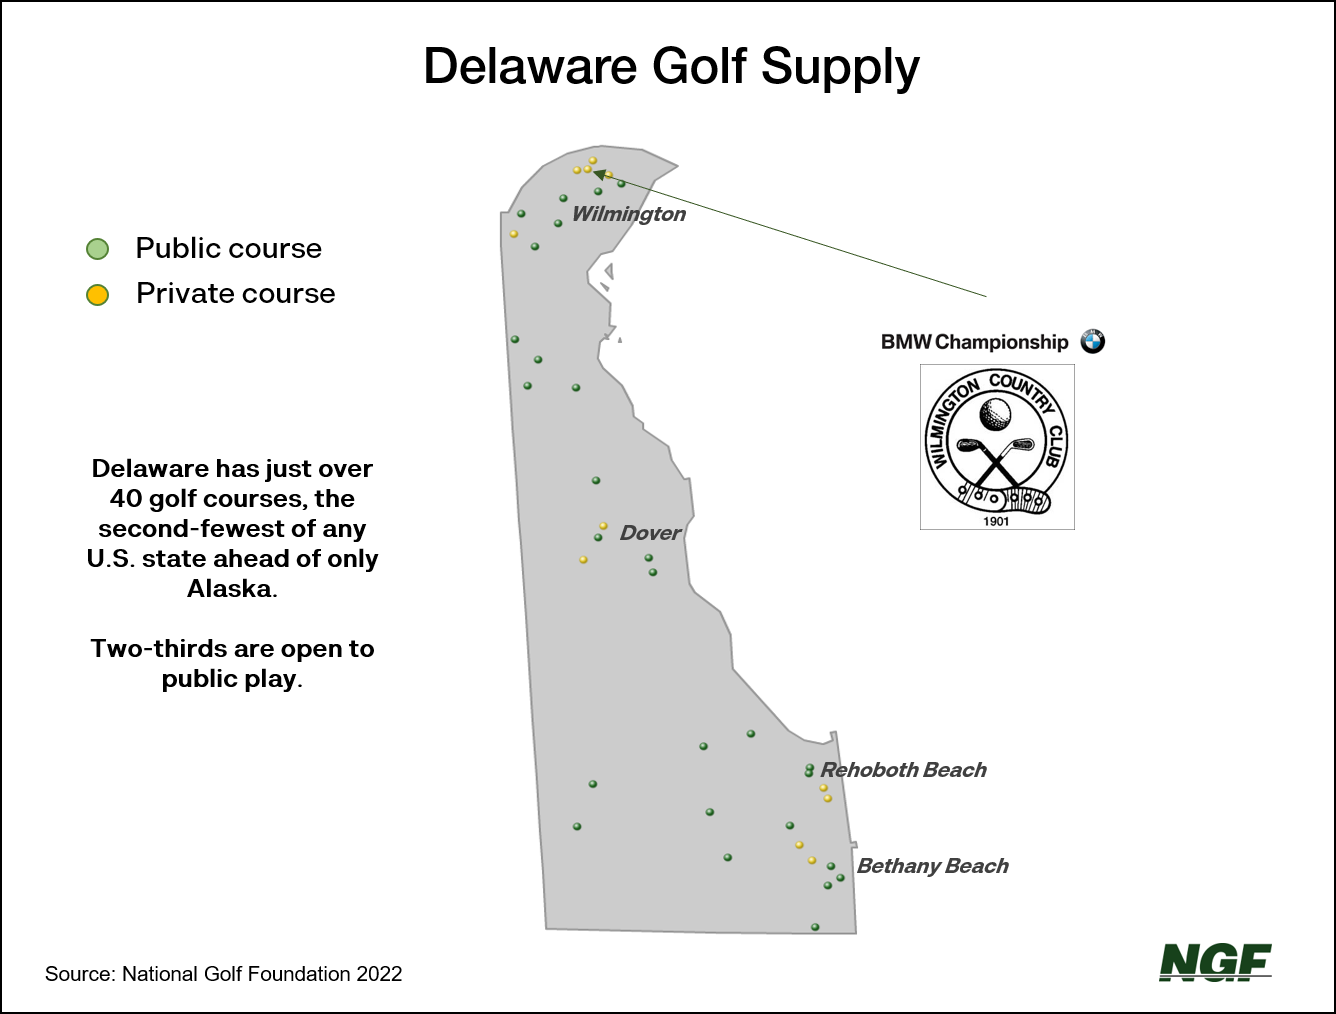 Delaware Golf Supply Snapshot